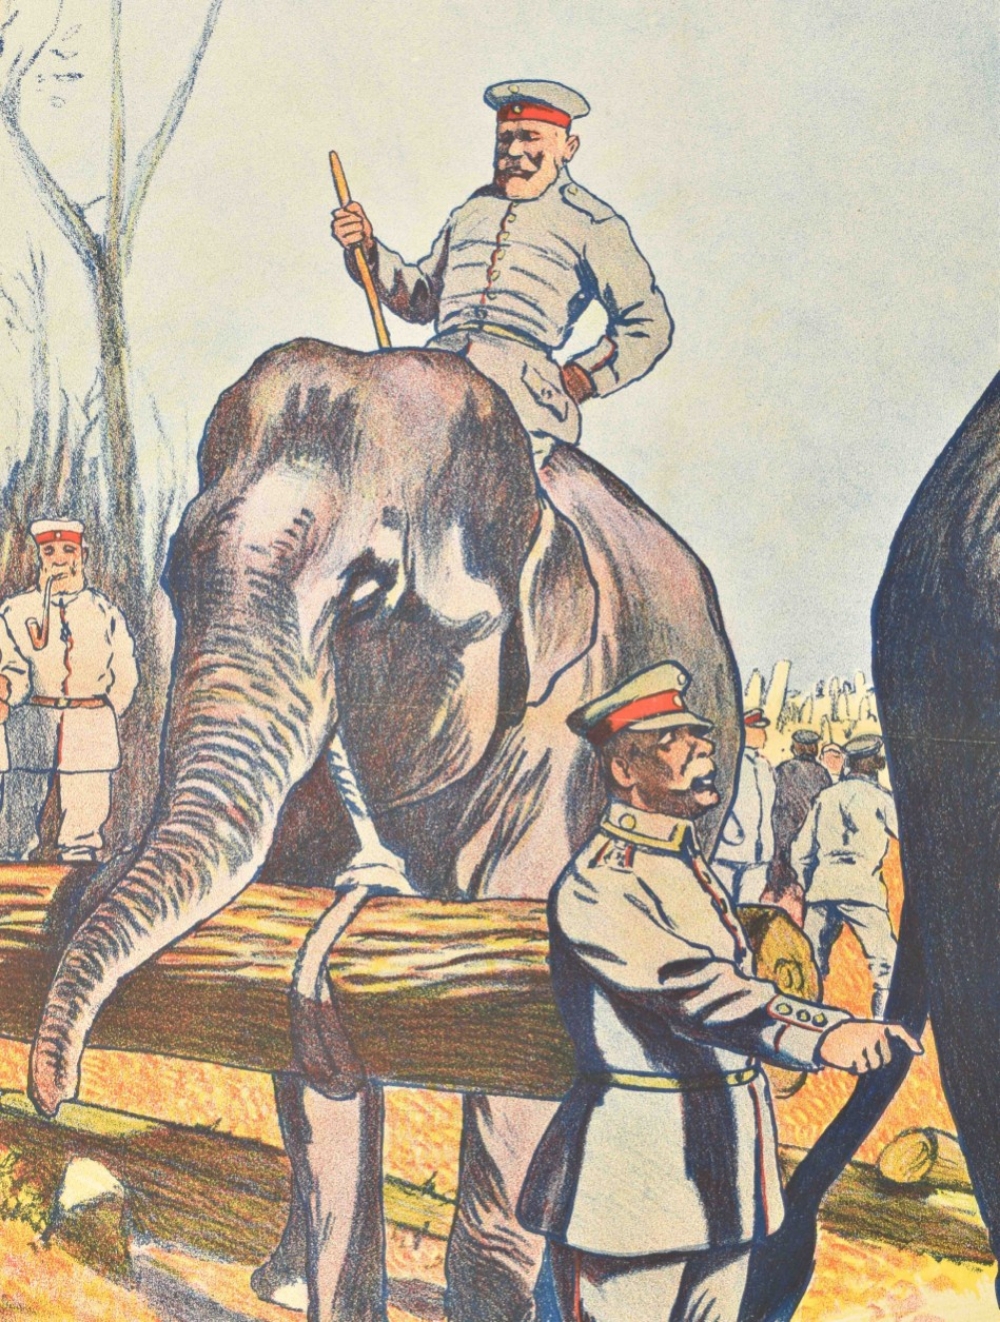 [Elephants. Hagenbeck] "Military elephants" - Image 5 of 6